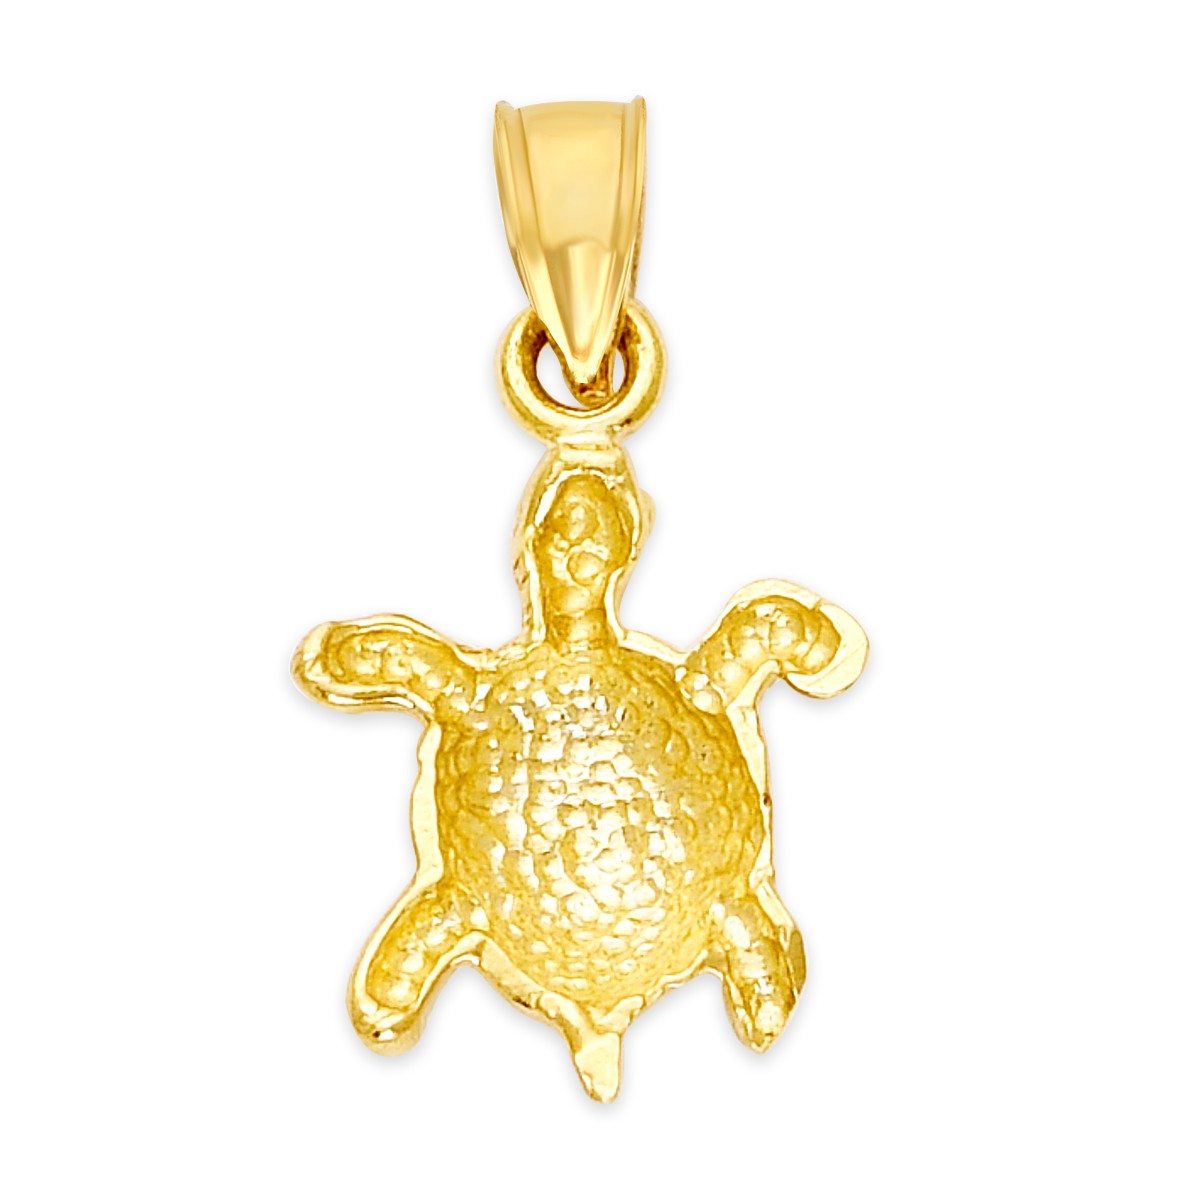 Solid Gold Turtle Pendant - 10k or 14k